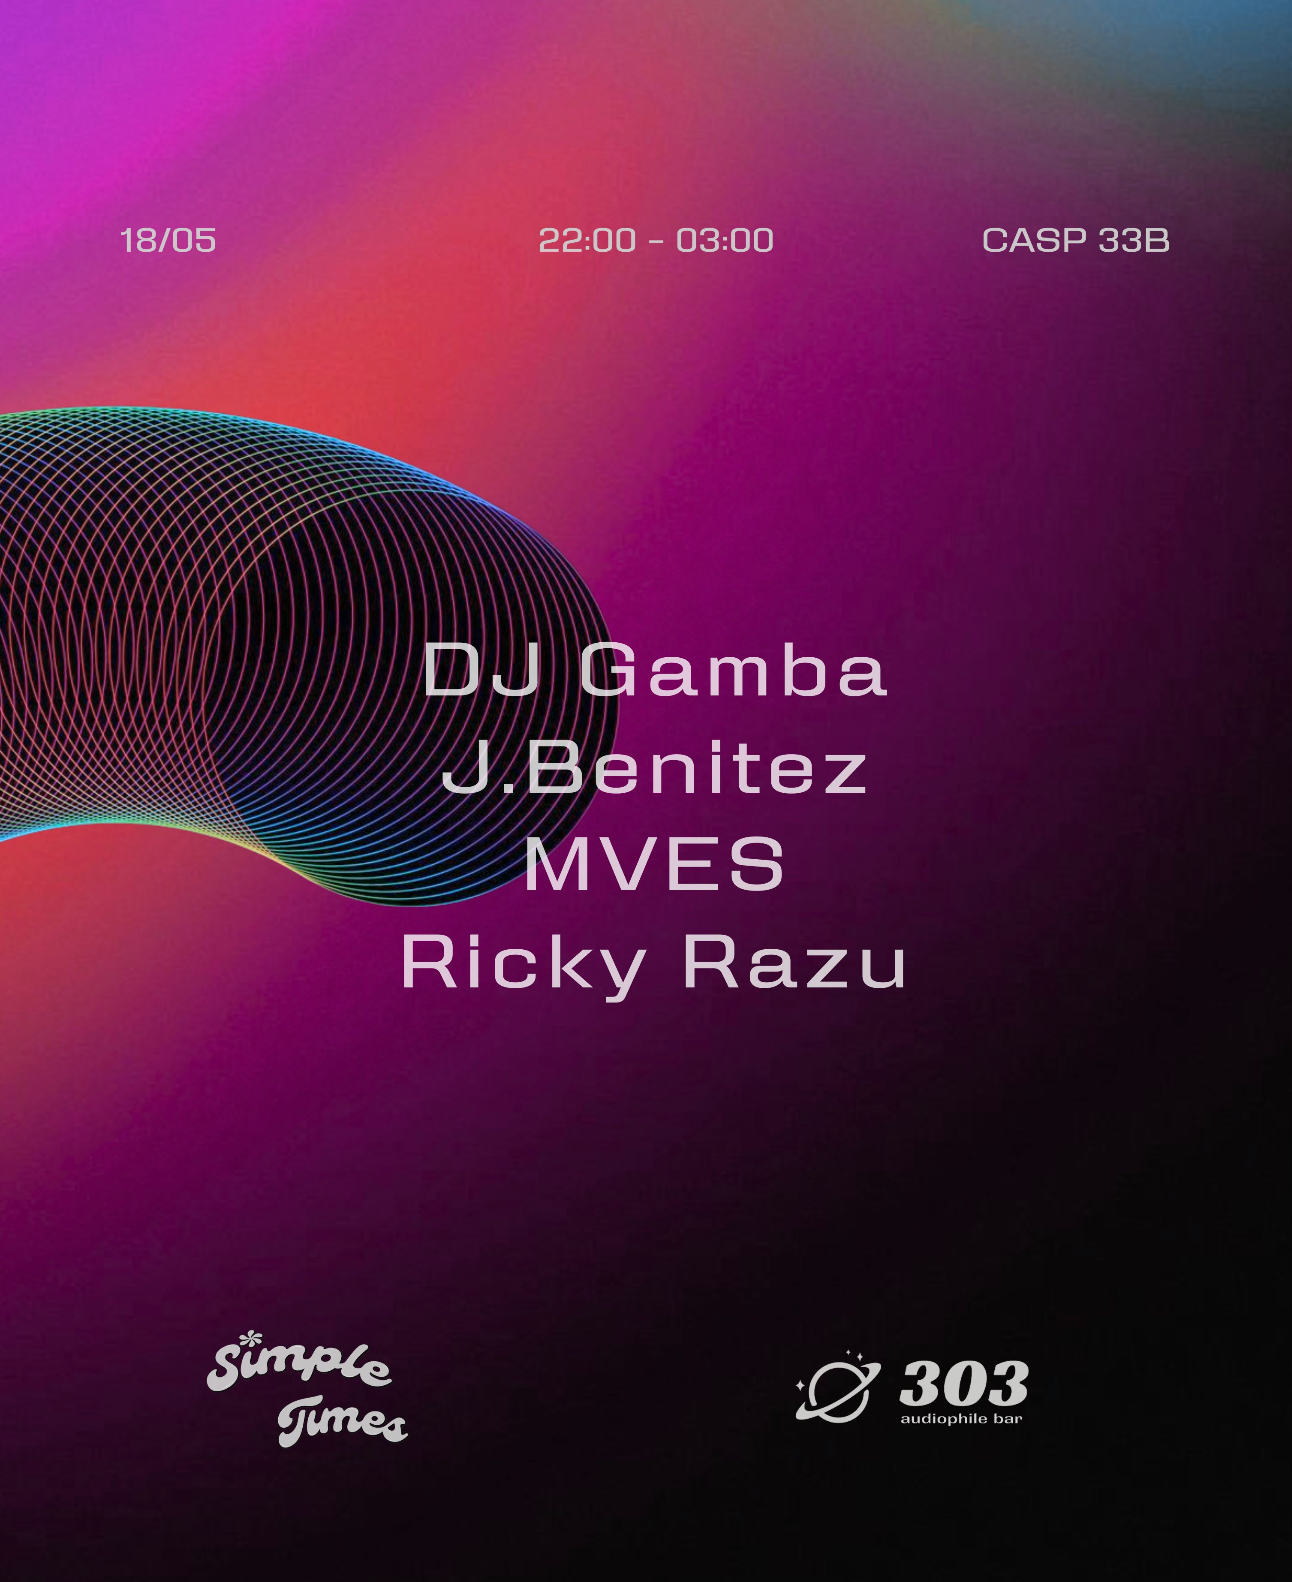 Simple Times at 303 / Ricky Razu, DJ Gamba, mves, J.Benitez - フライヤー表